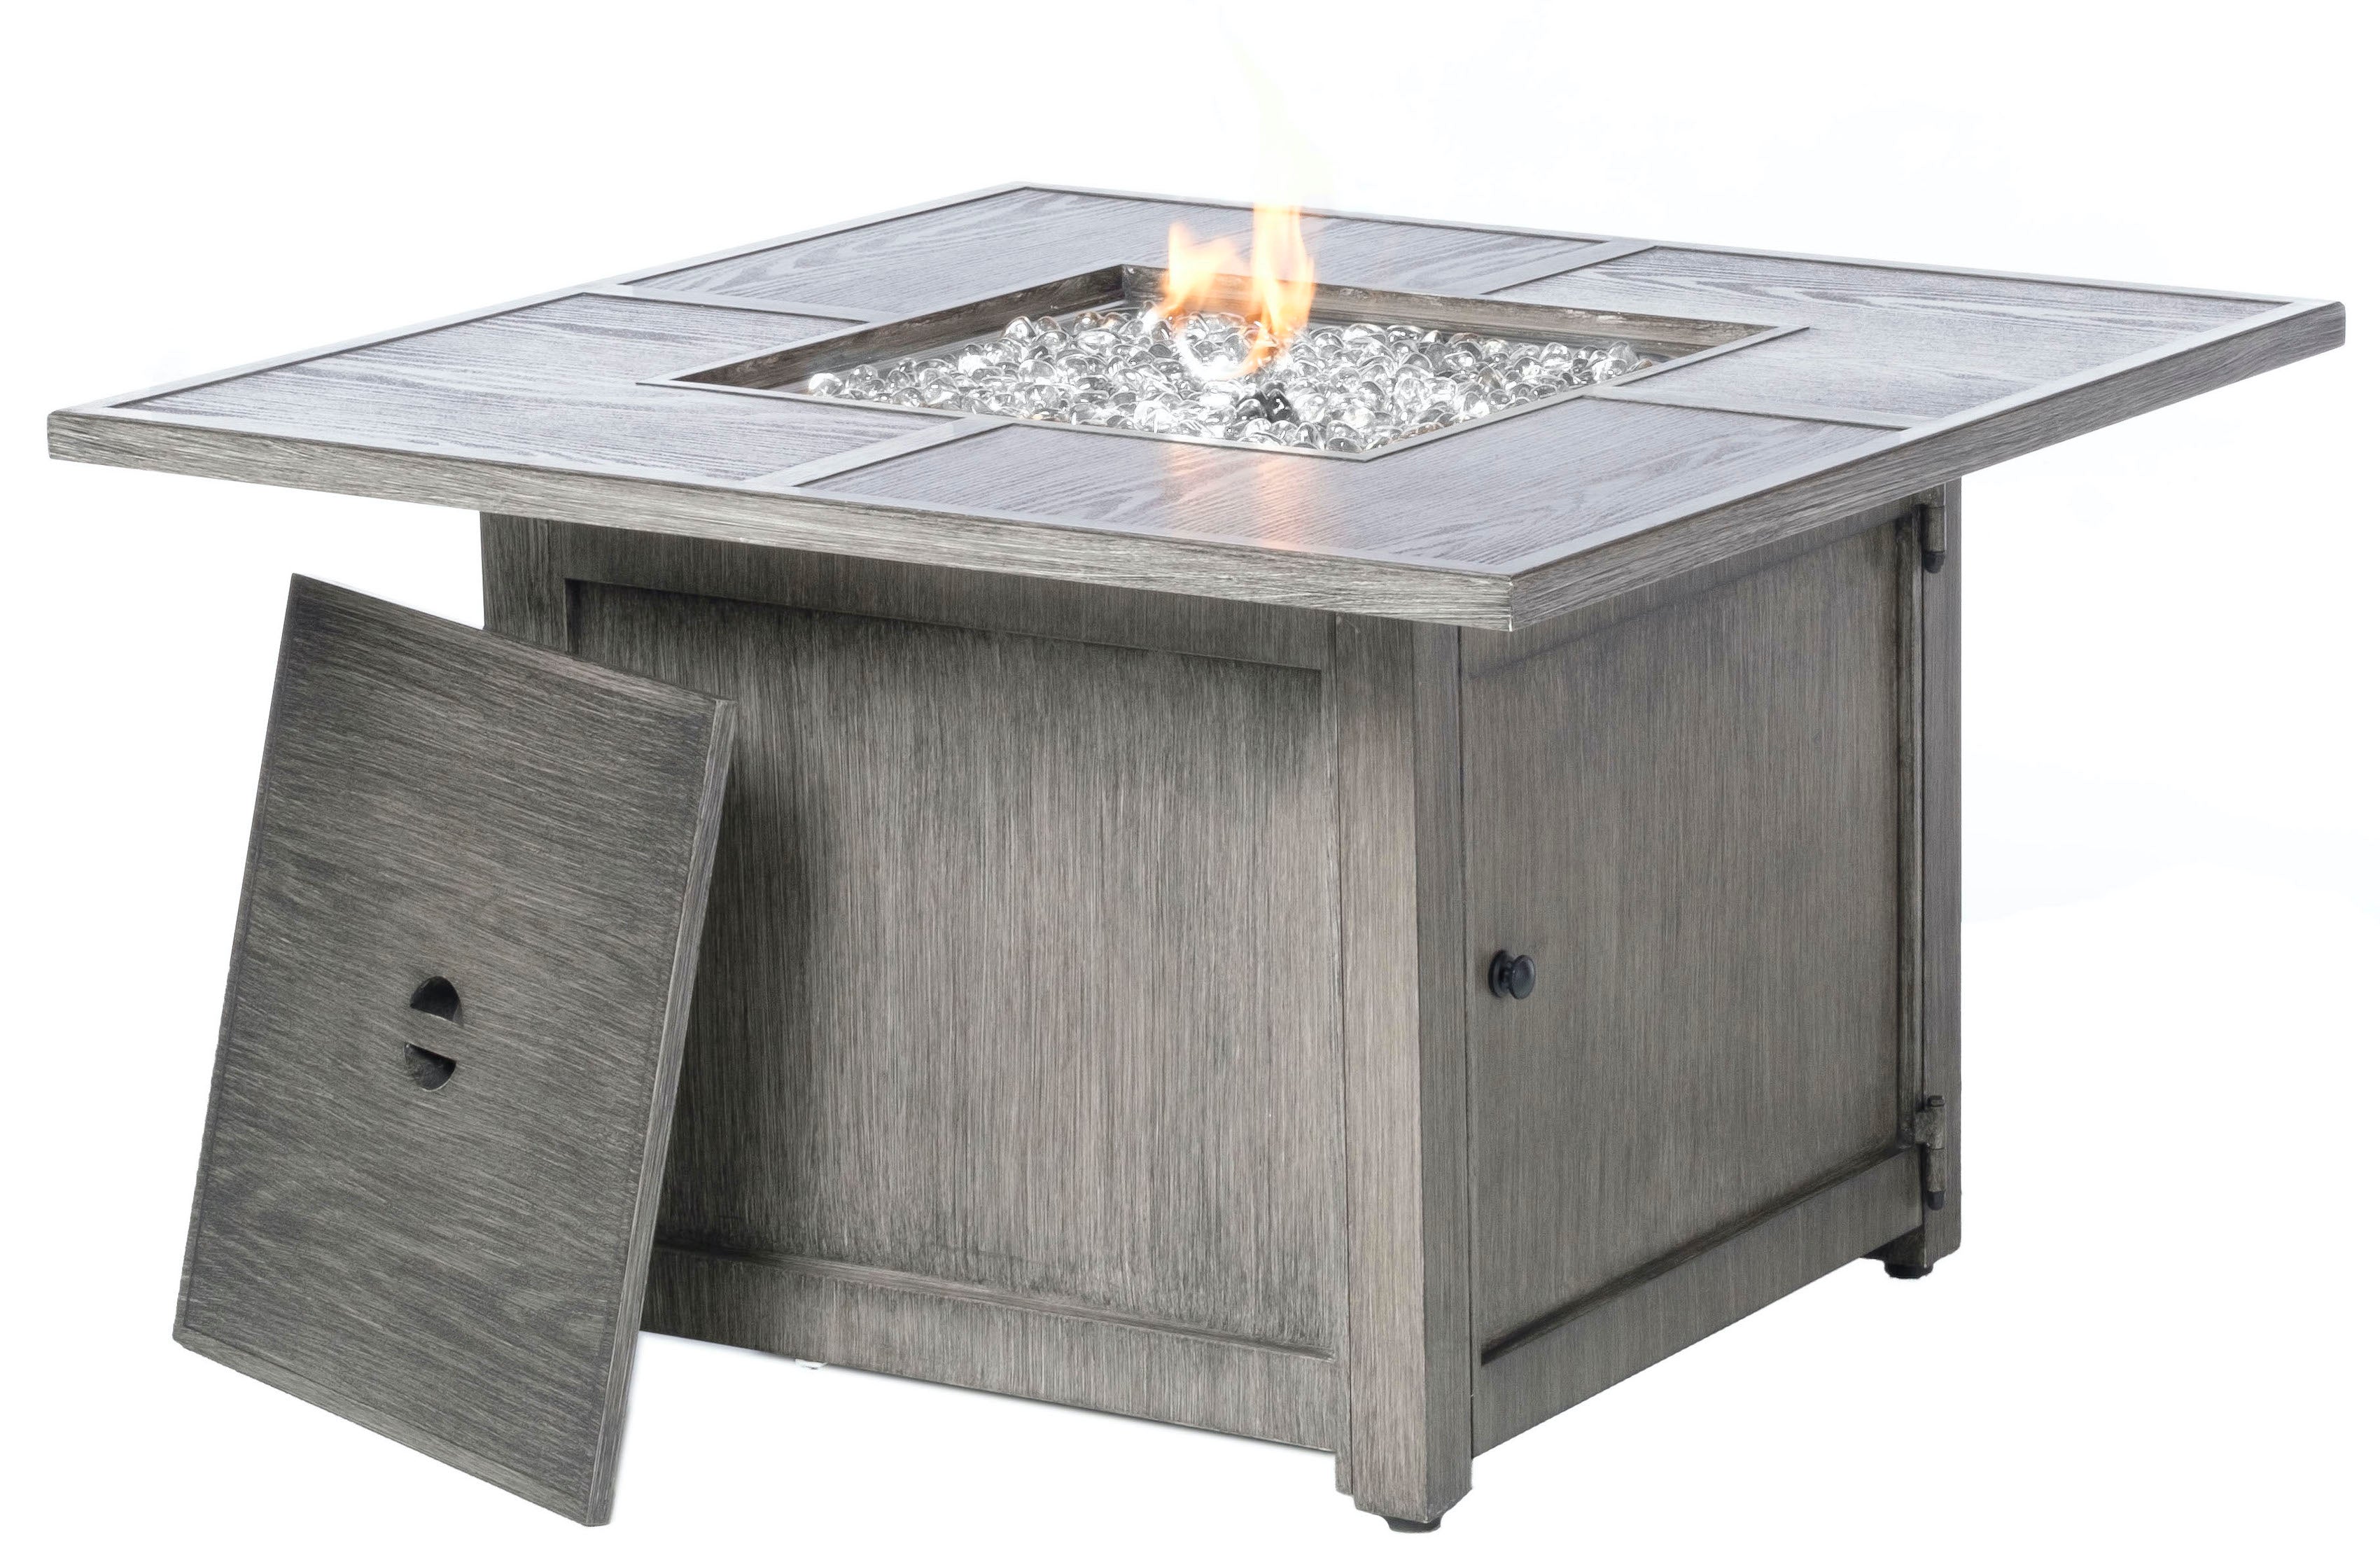 Alfresco Home Cheyenne Blacksmith Cast Aluminum 40' Square Fire Pit Table